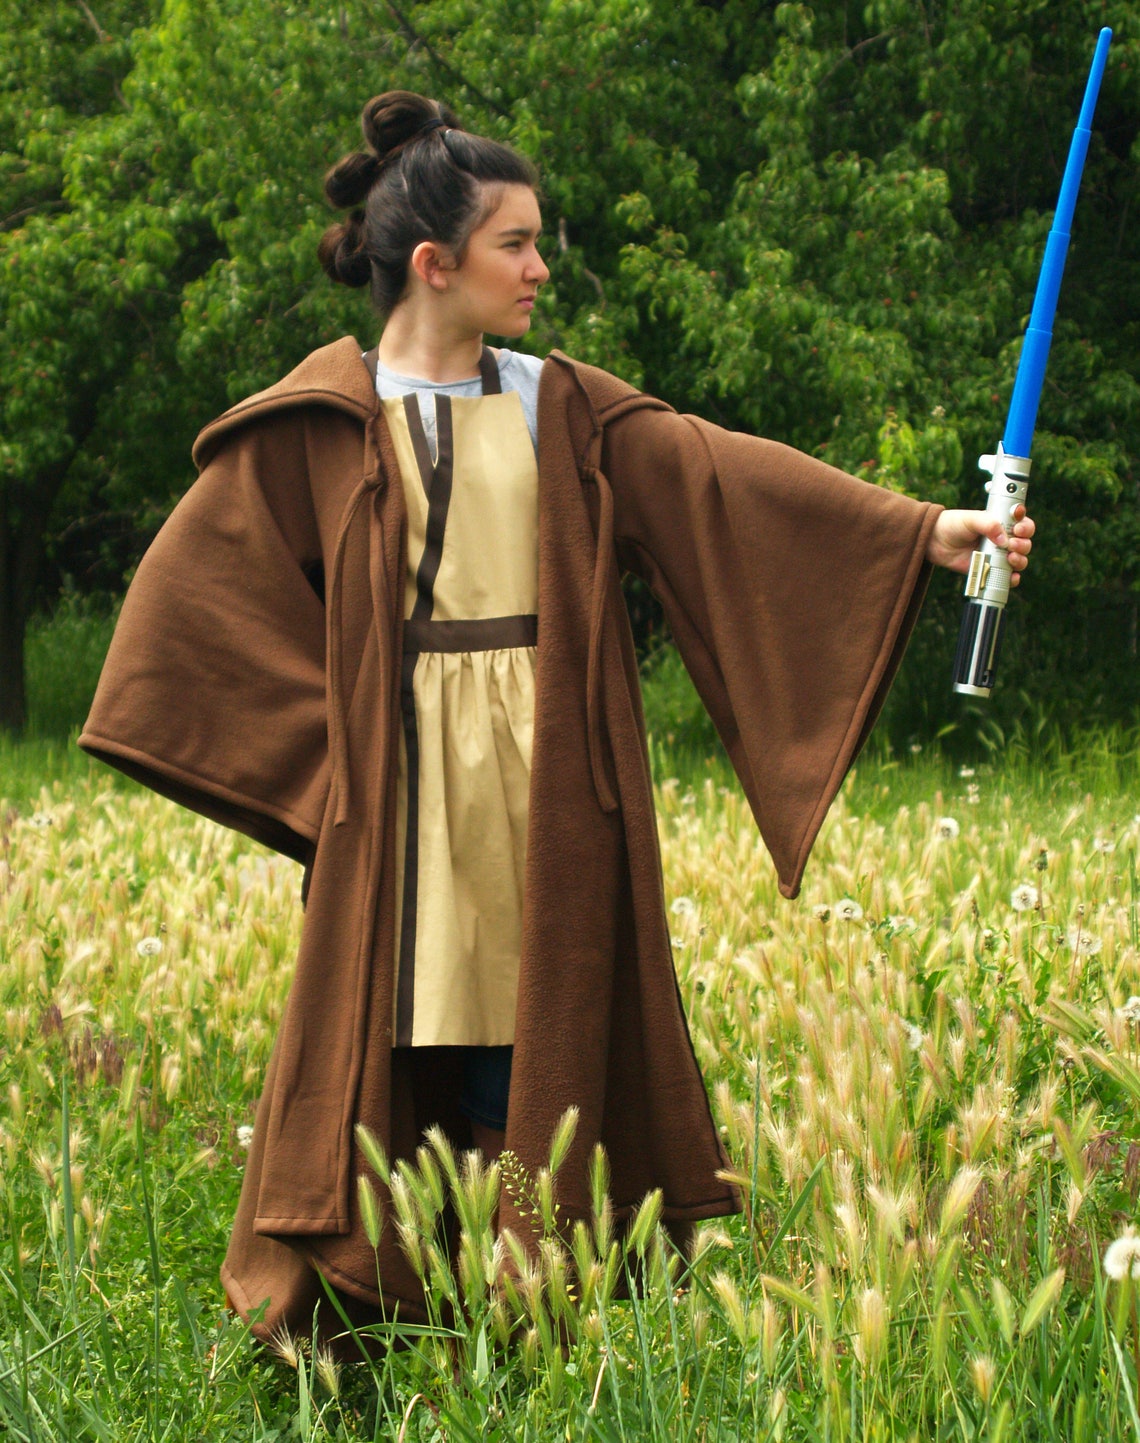 Star Wars Princess Leia Disney Inspired Costume Apron